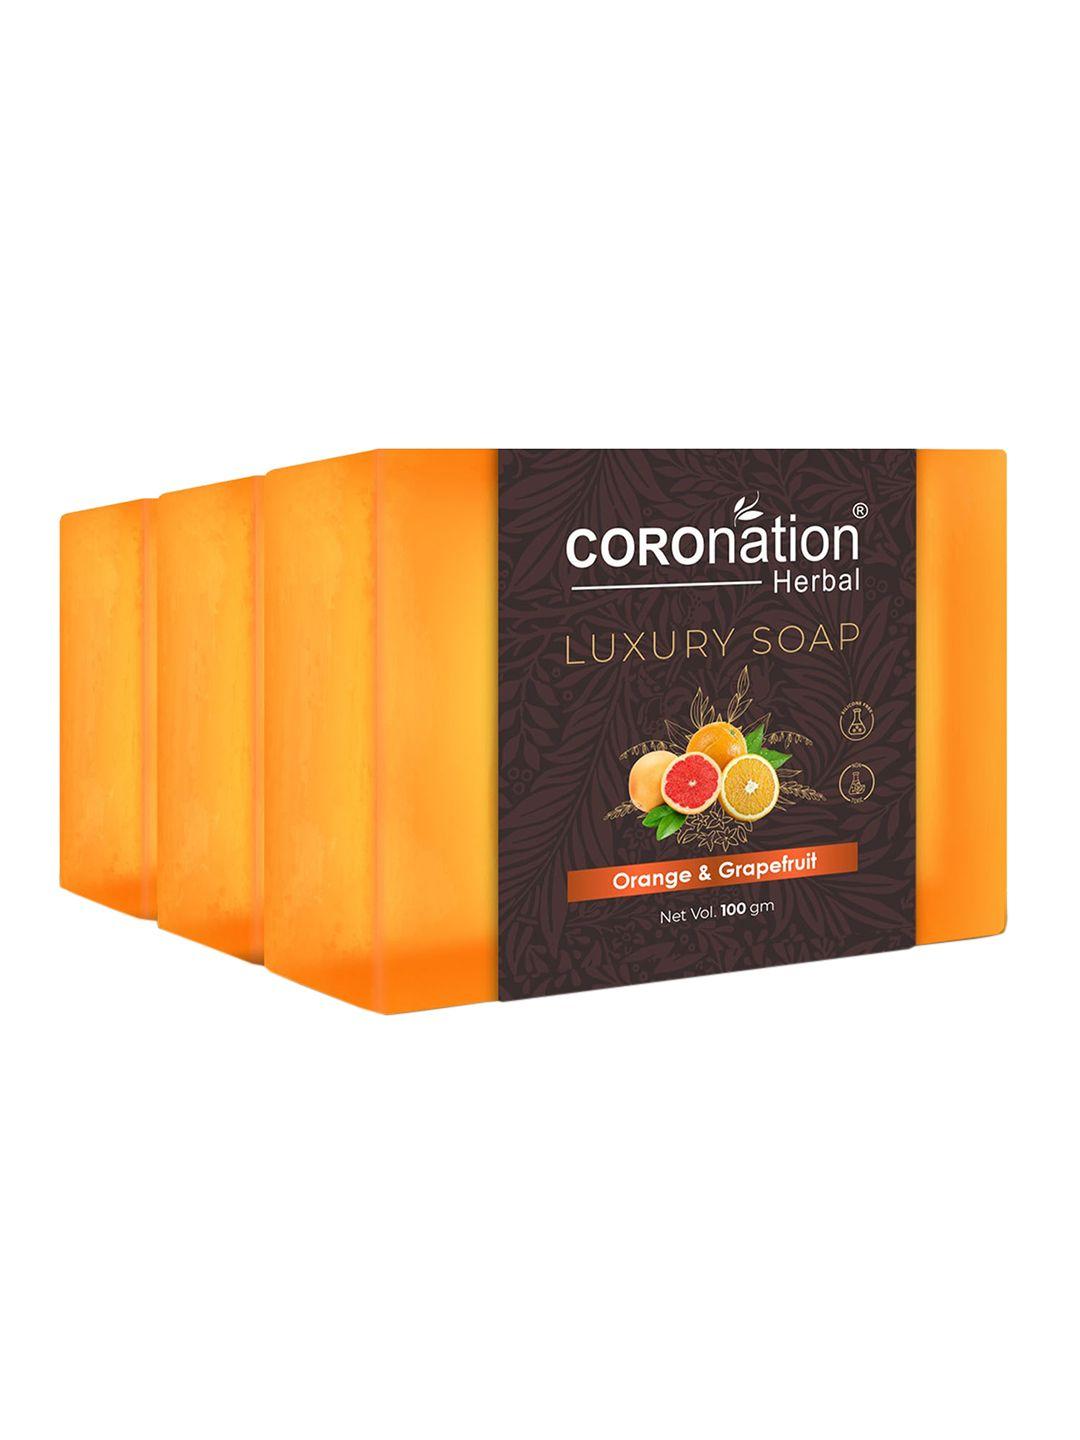 coronation herbal set of 3 orange & grapefruit luxury soaps - 100g each